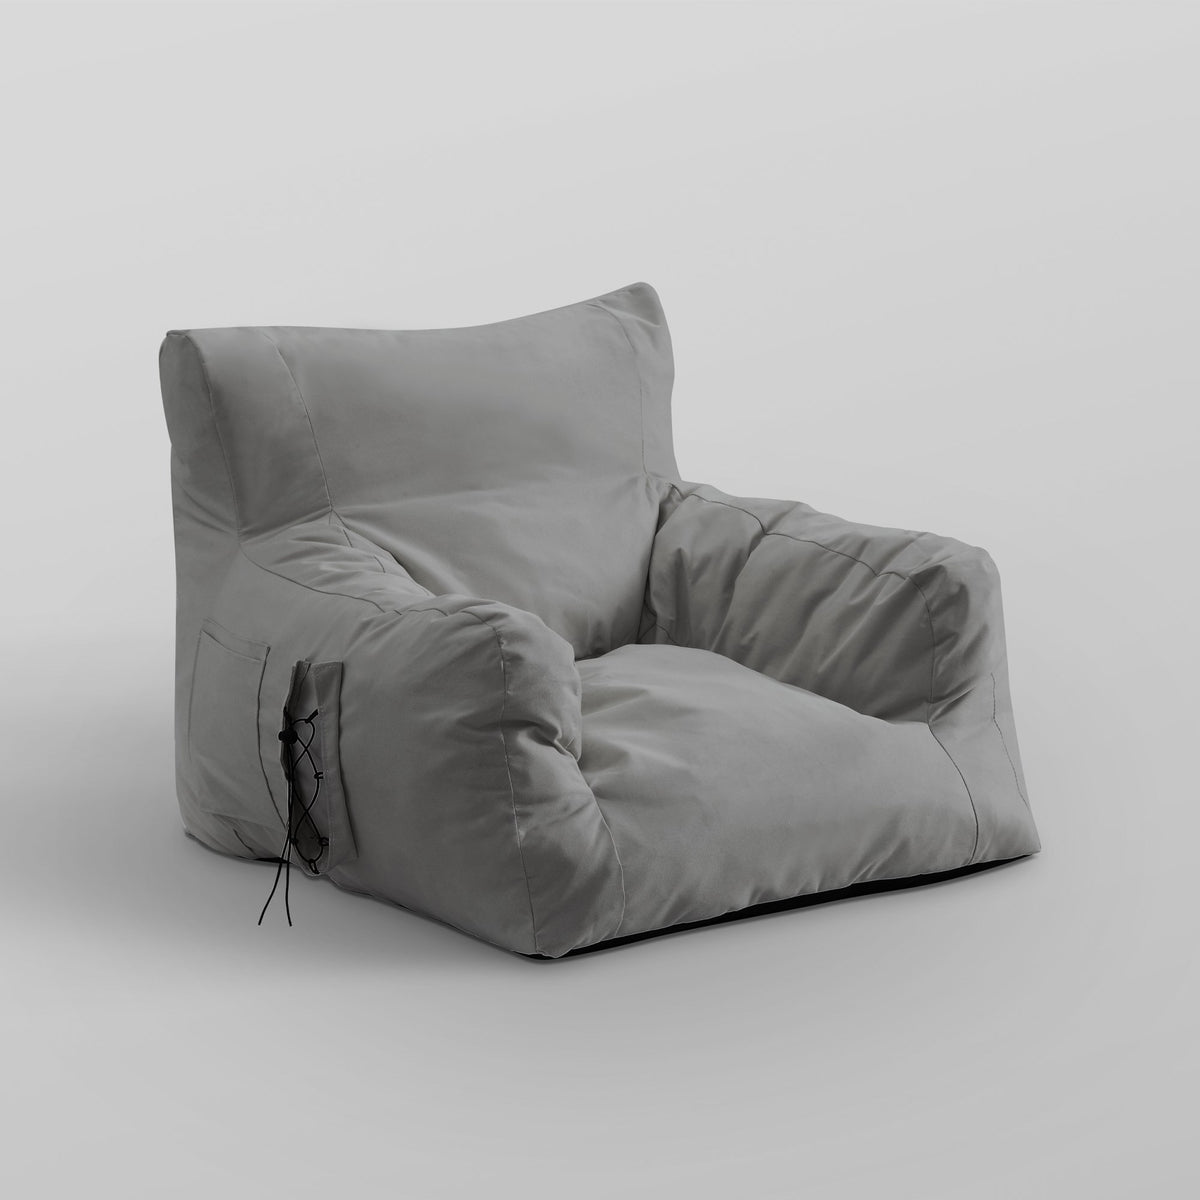 Loungie Resty Light Grey Bean Bag Lounge Chair Nylon Foam Sleeper